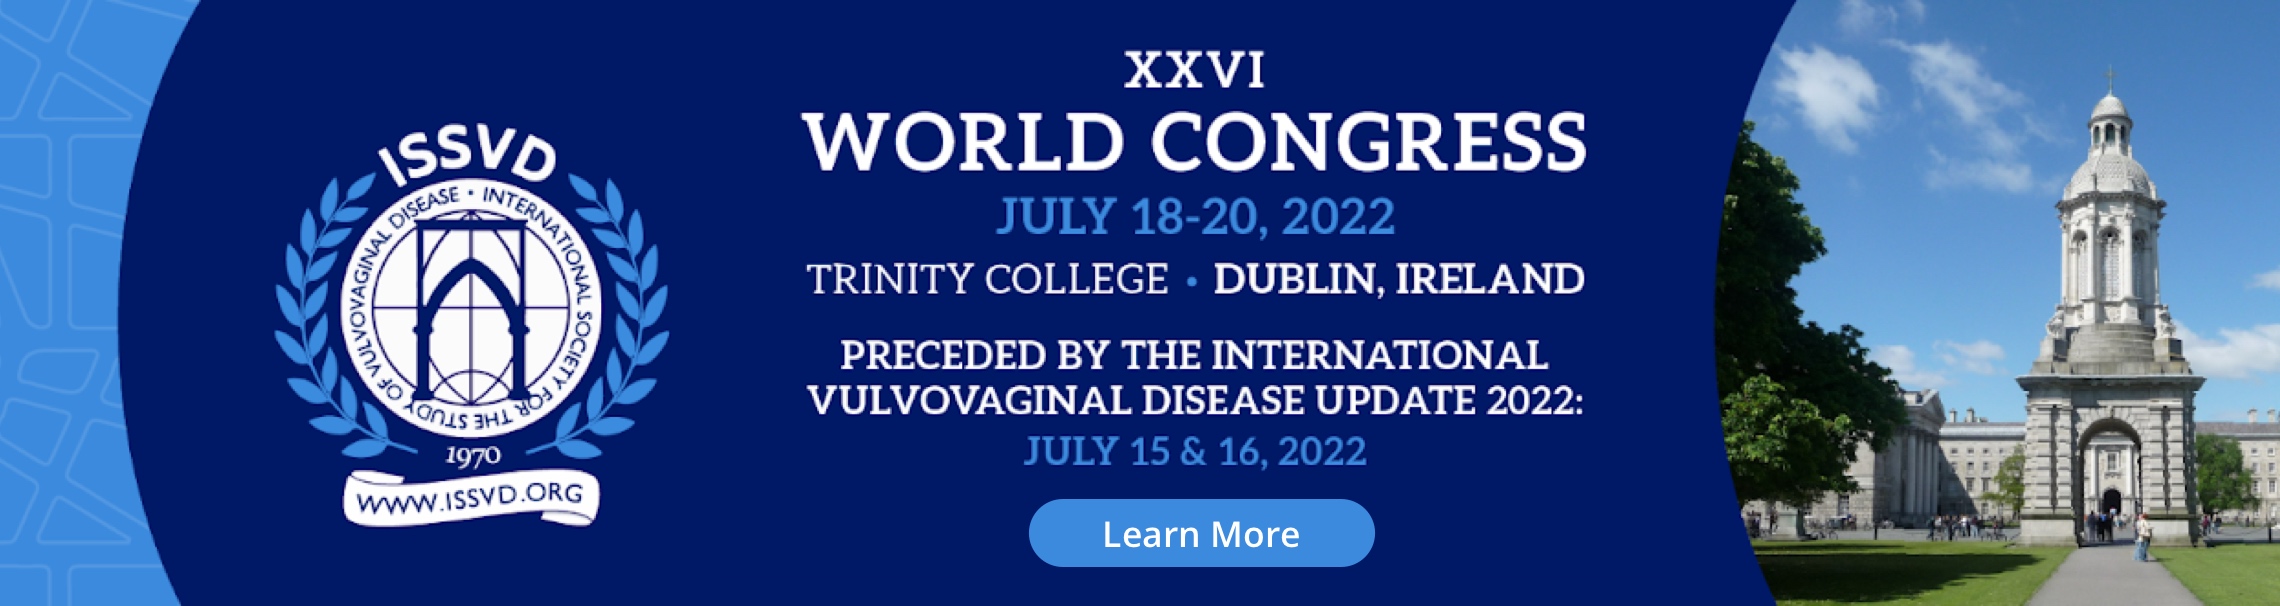 XXVI World Congress and/or International Vulvovaginal Disease